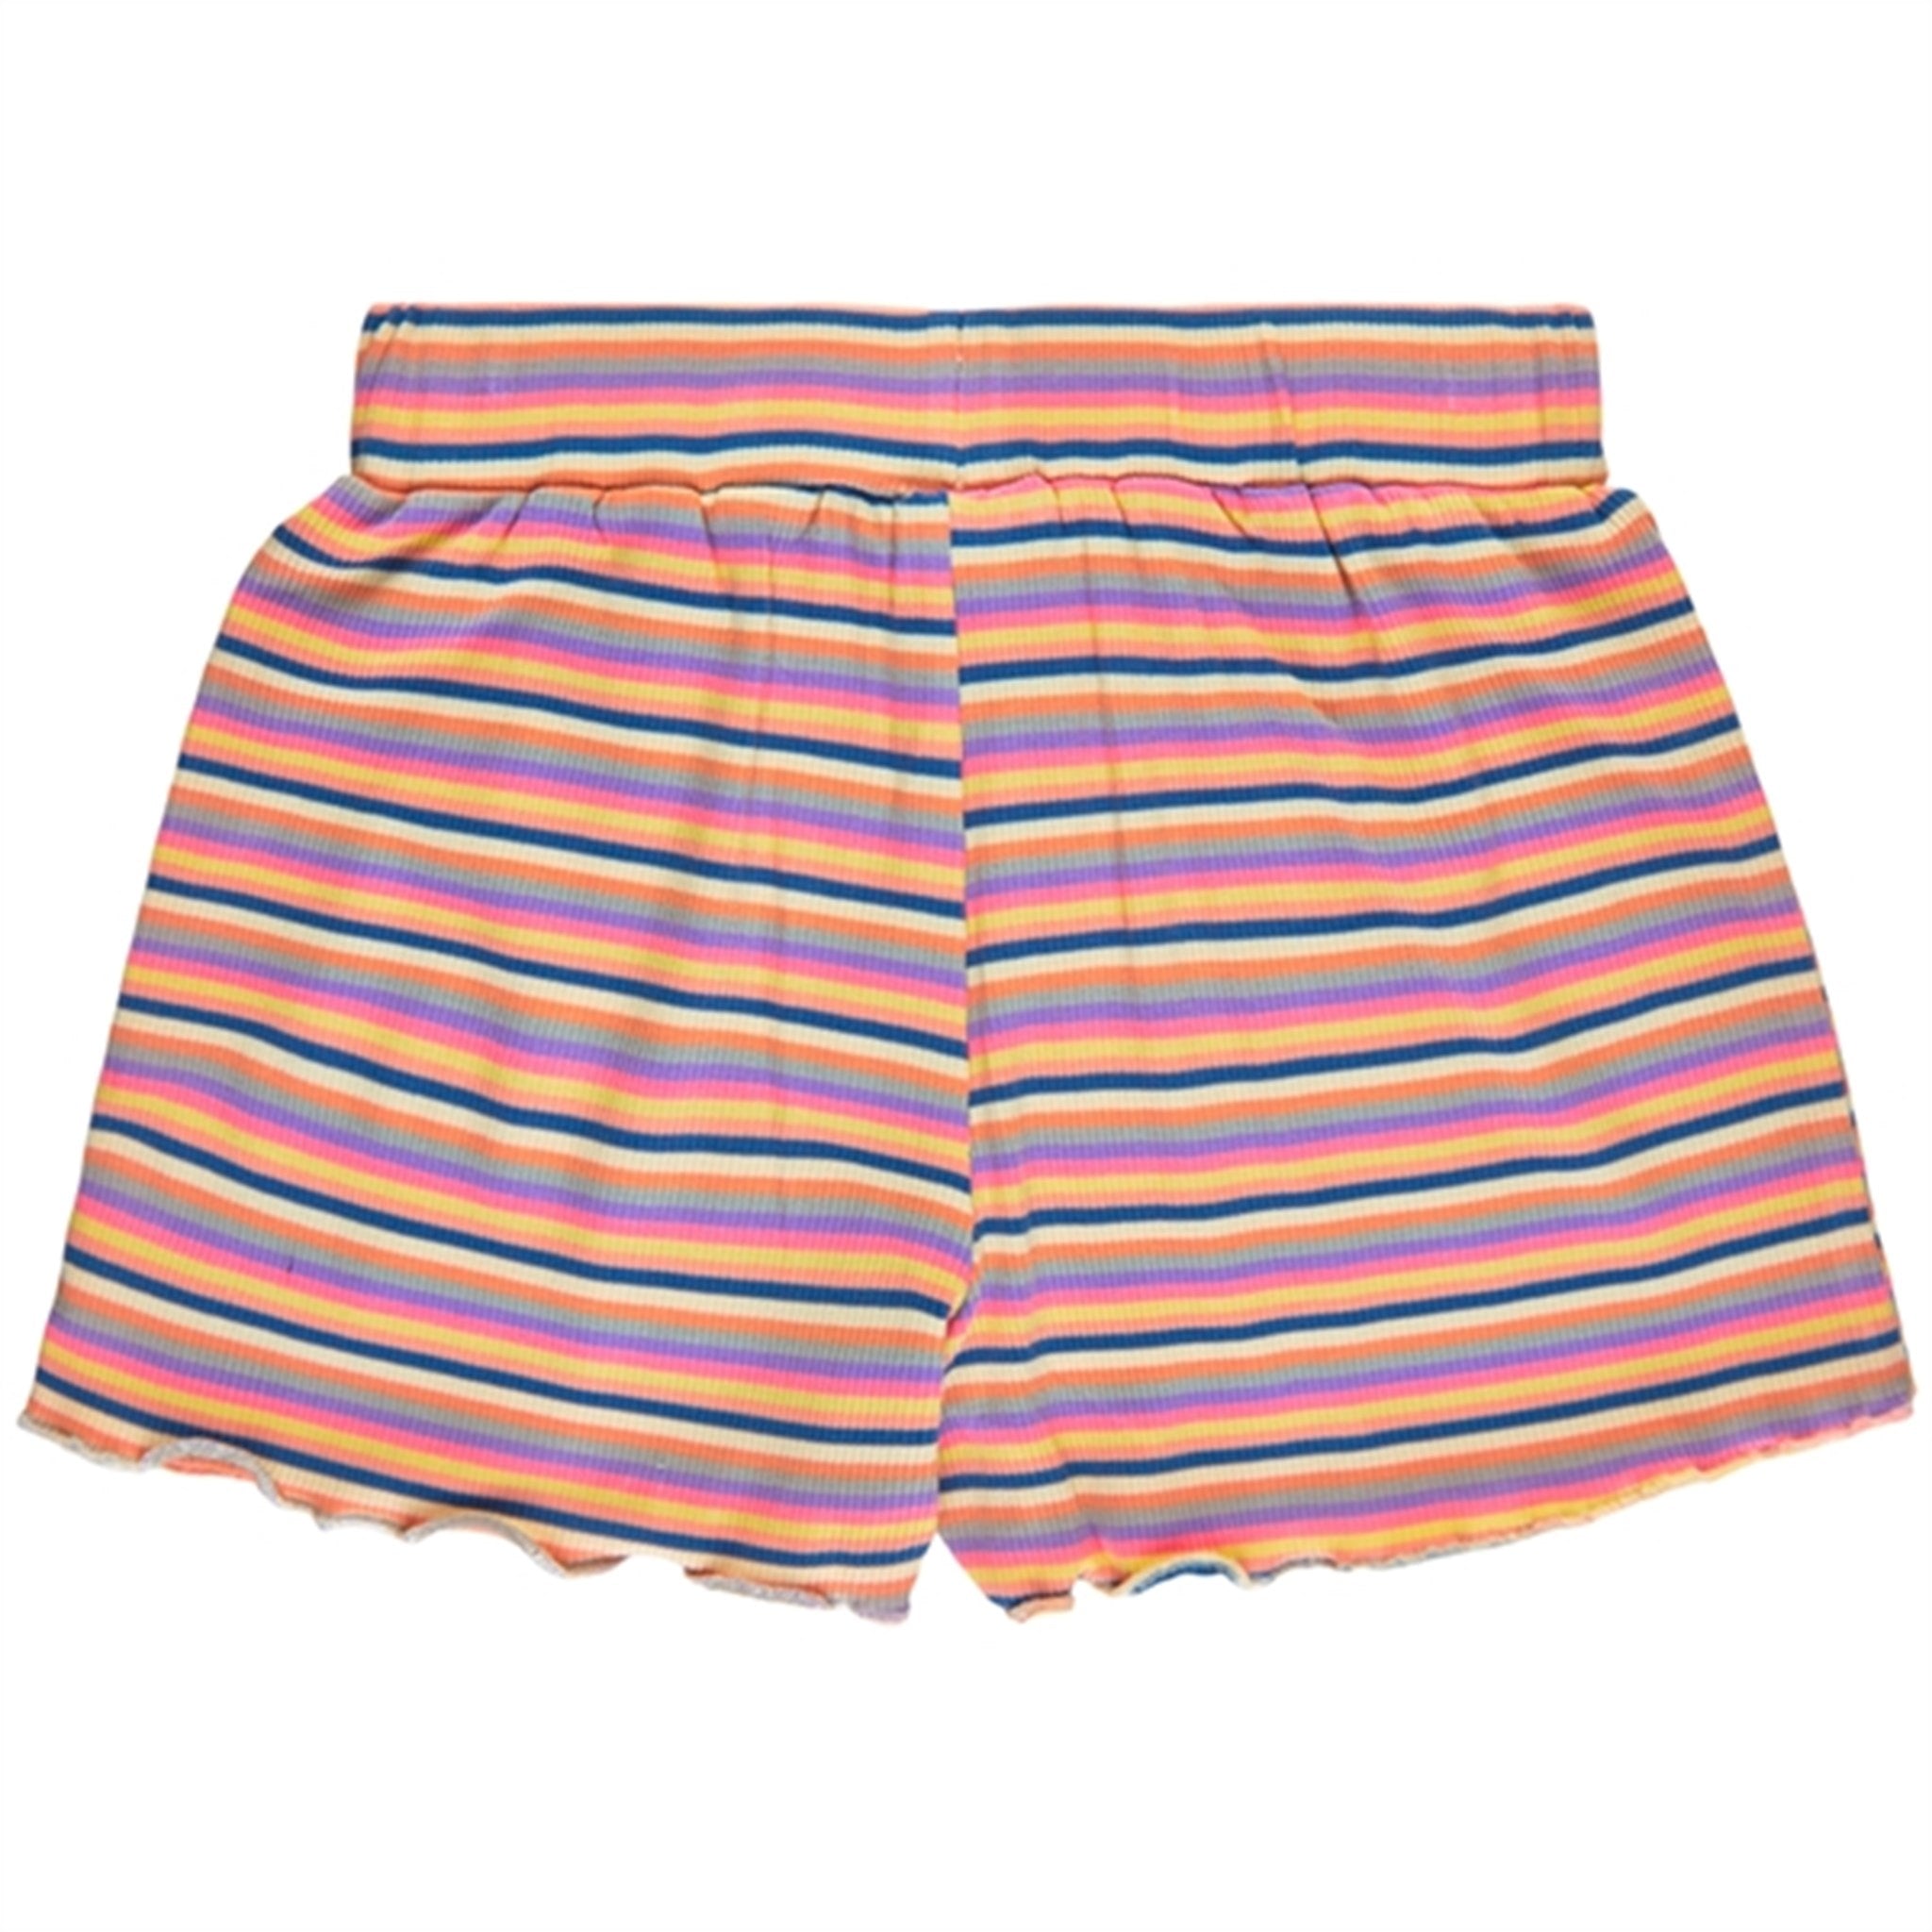 THE NEW Multi Stripe Gola Rib Shorts 5